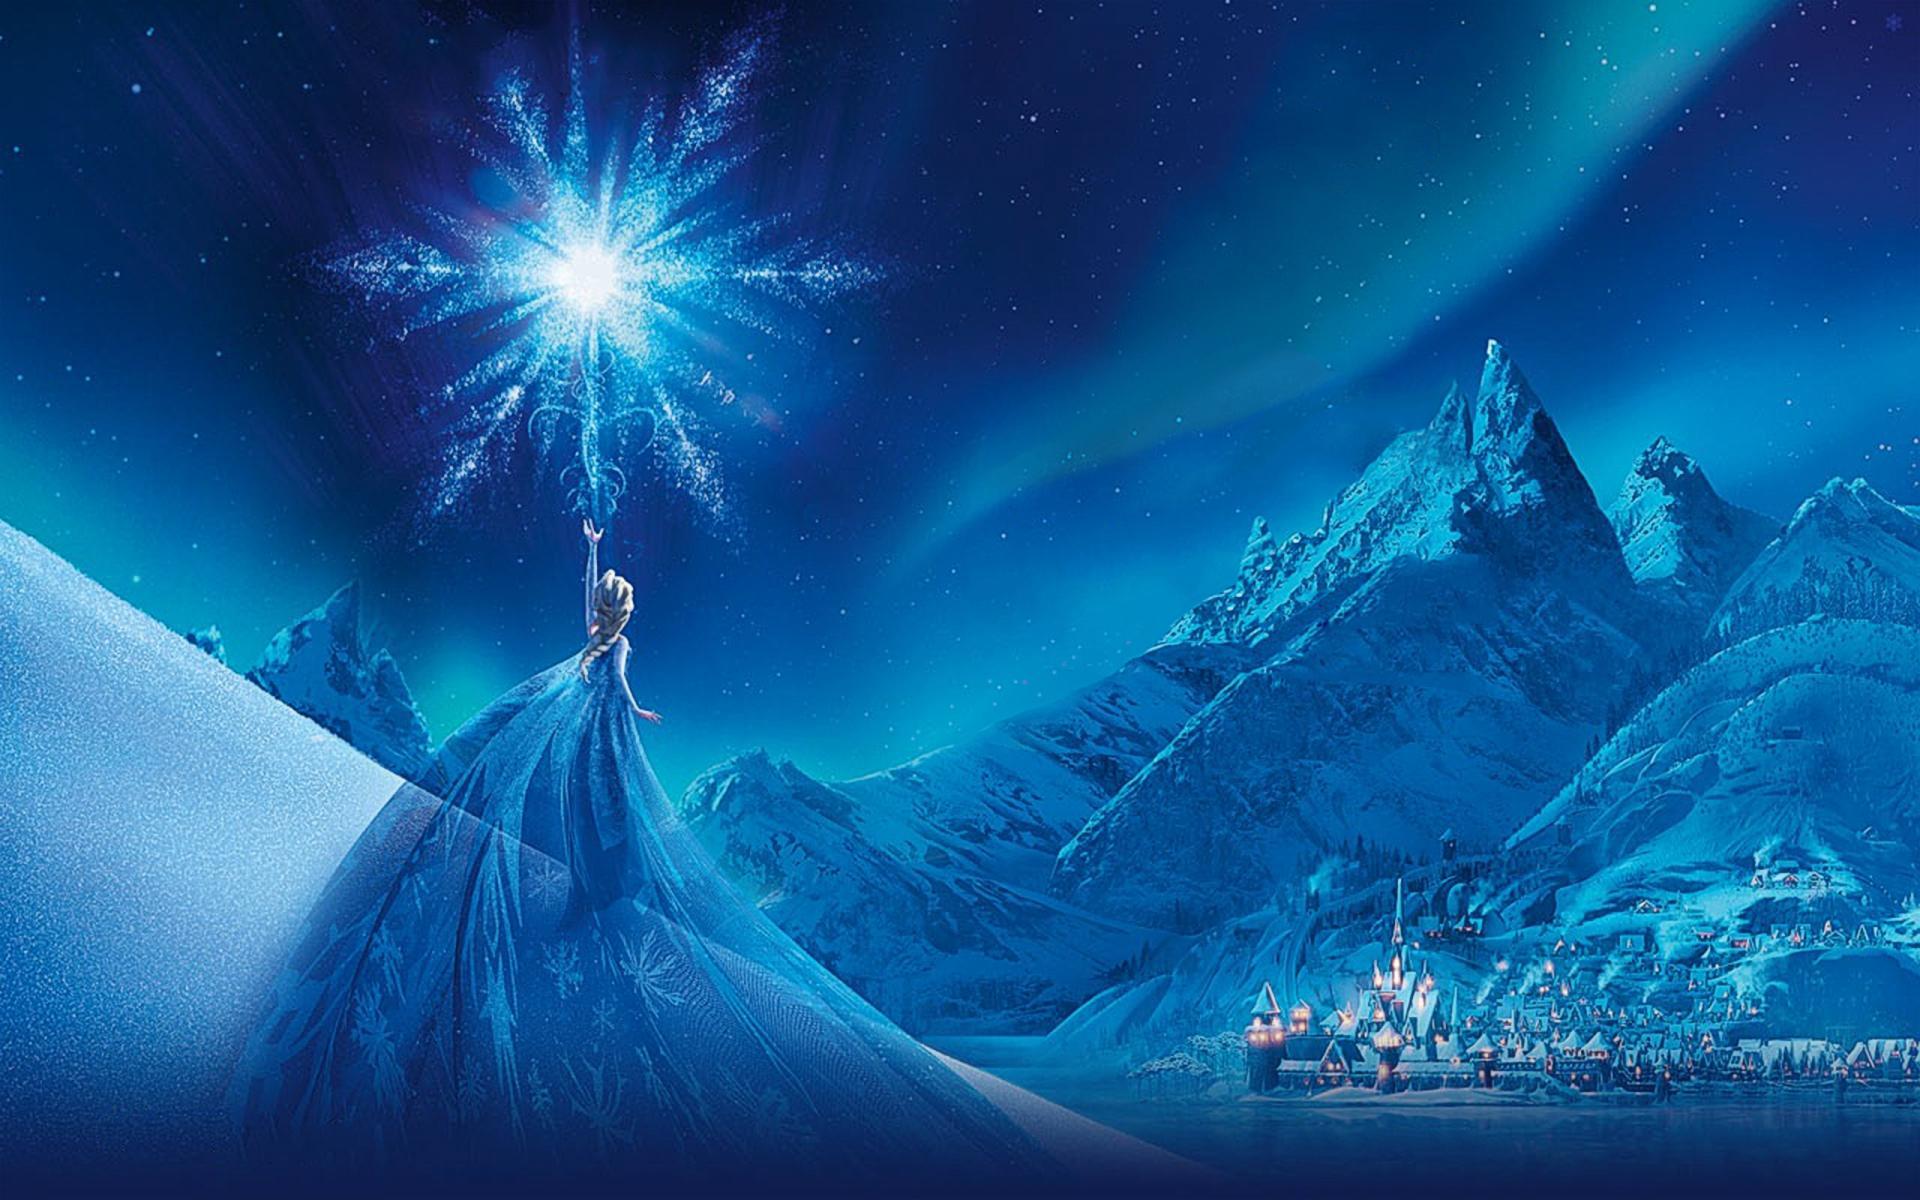 FROZEMBER The 'Frozen' Phenomenon